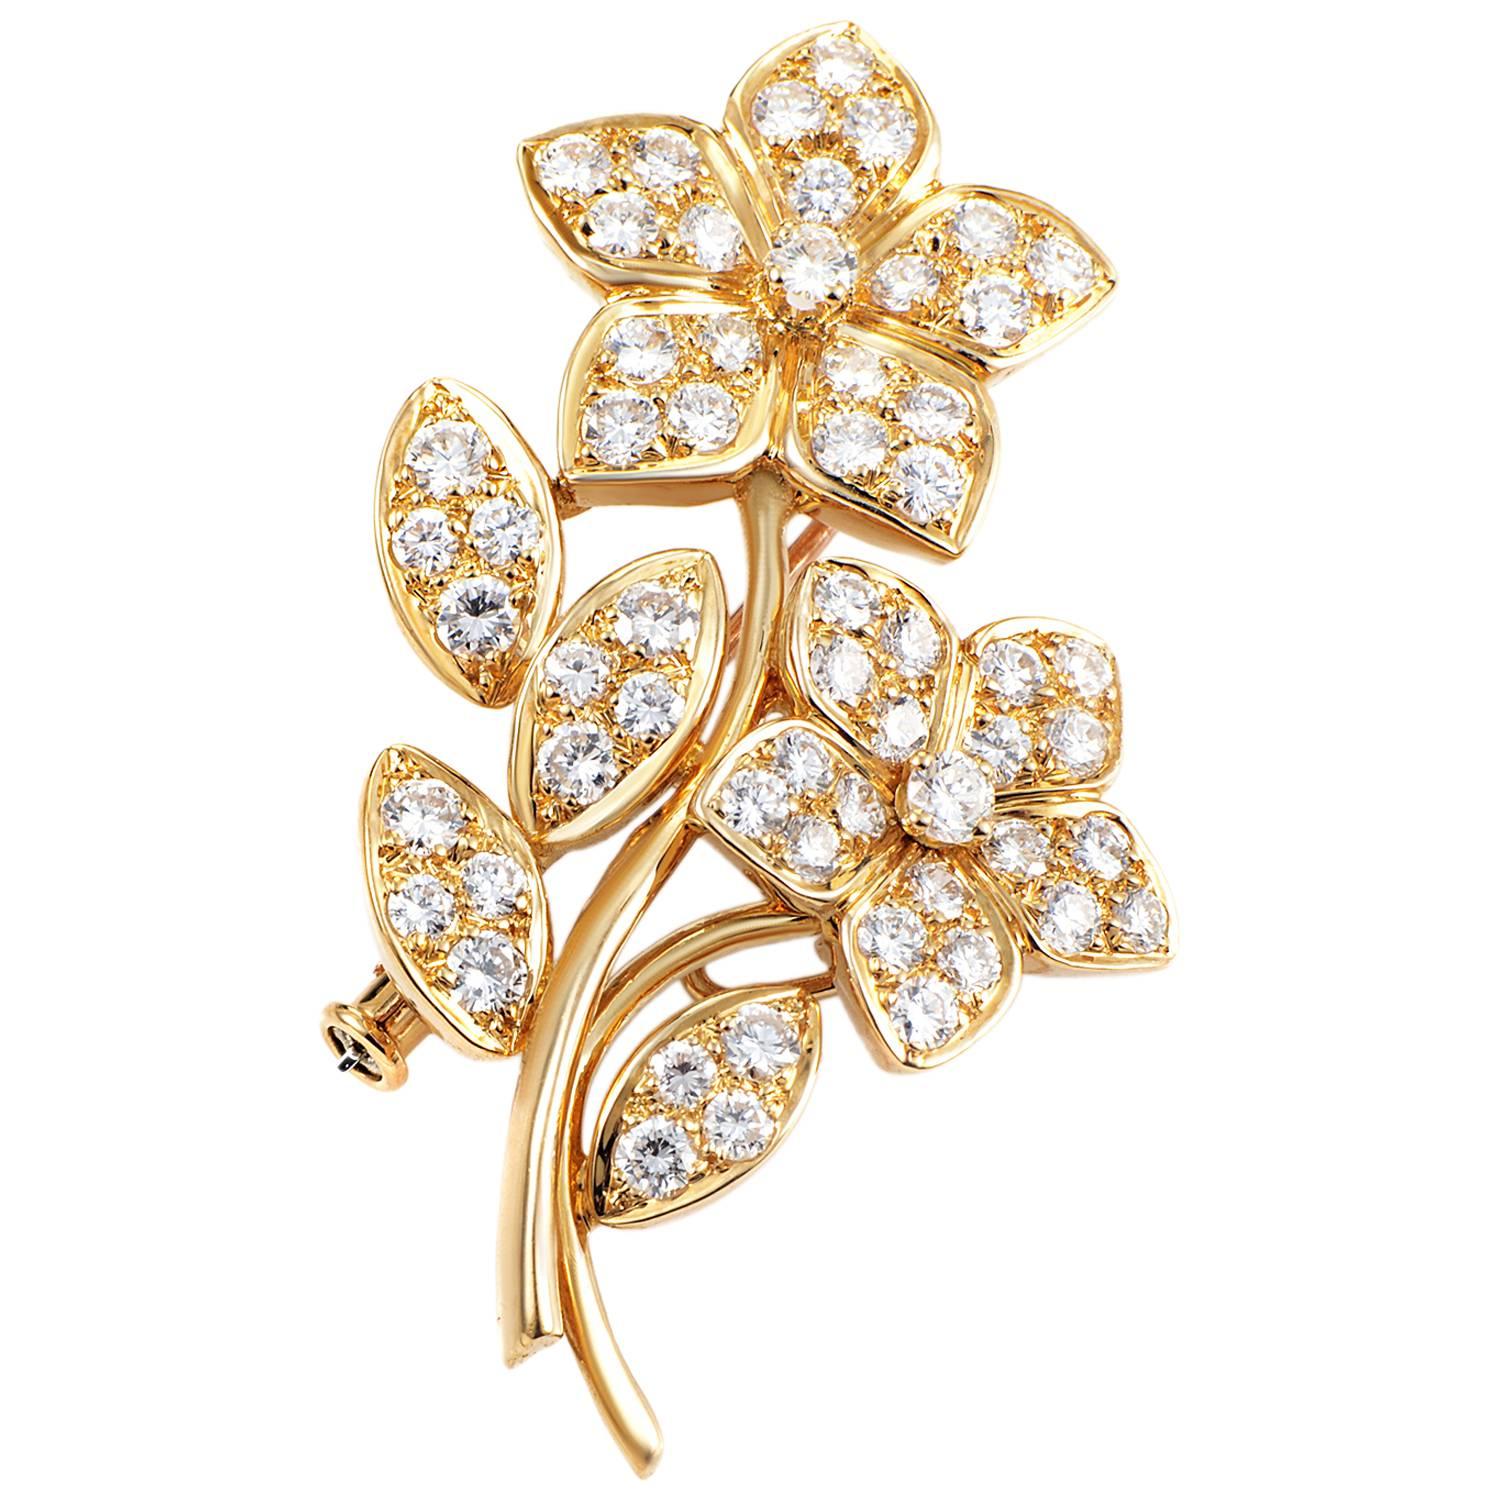 Van Cleef & Arpels Diamond Gold Flower Pin